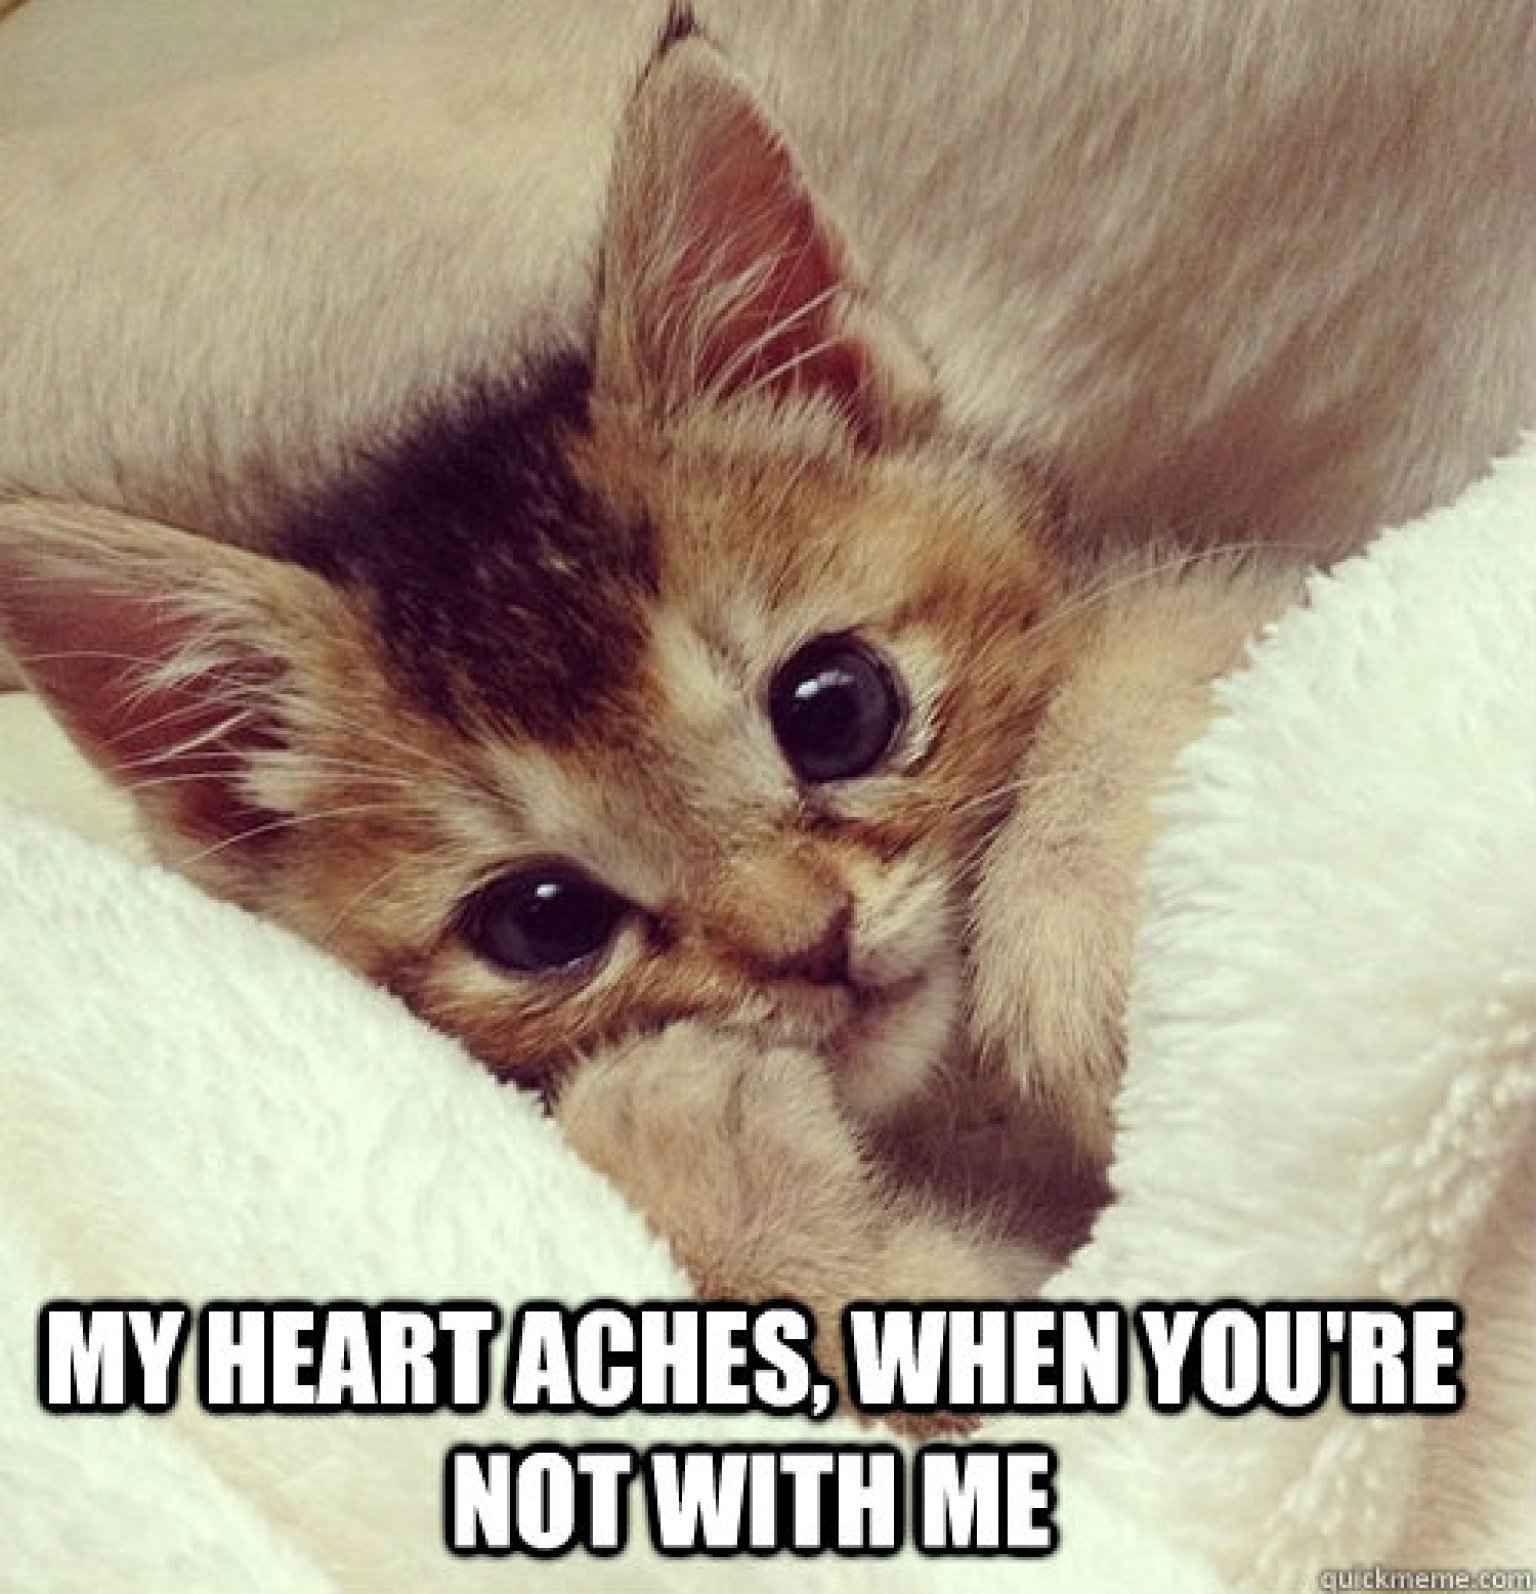 5 Cutest Cat memes ever!